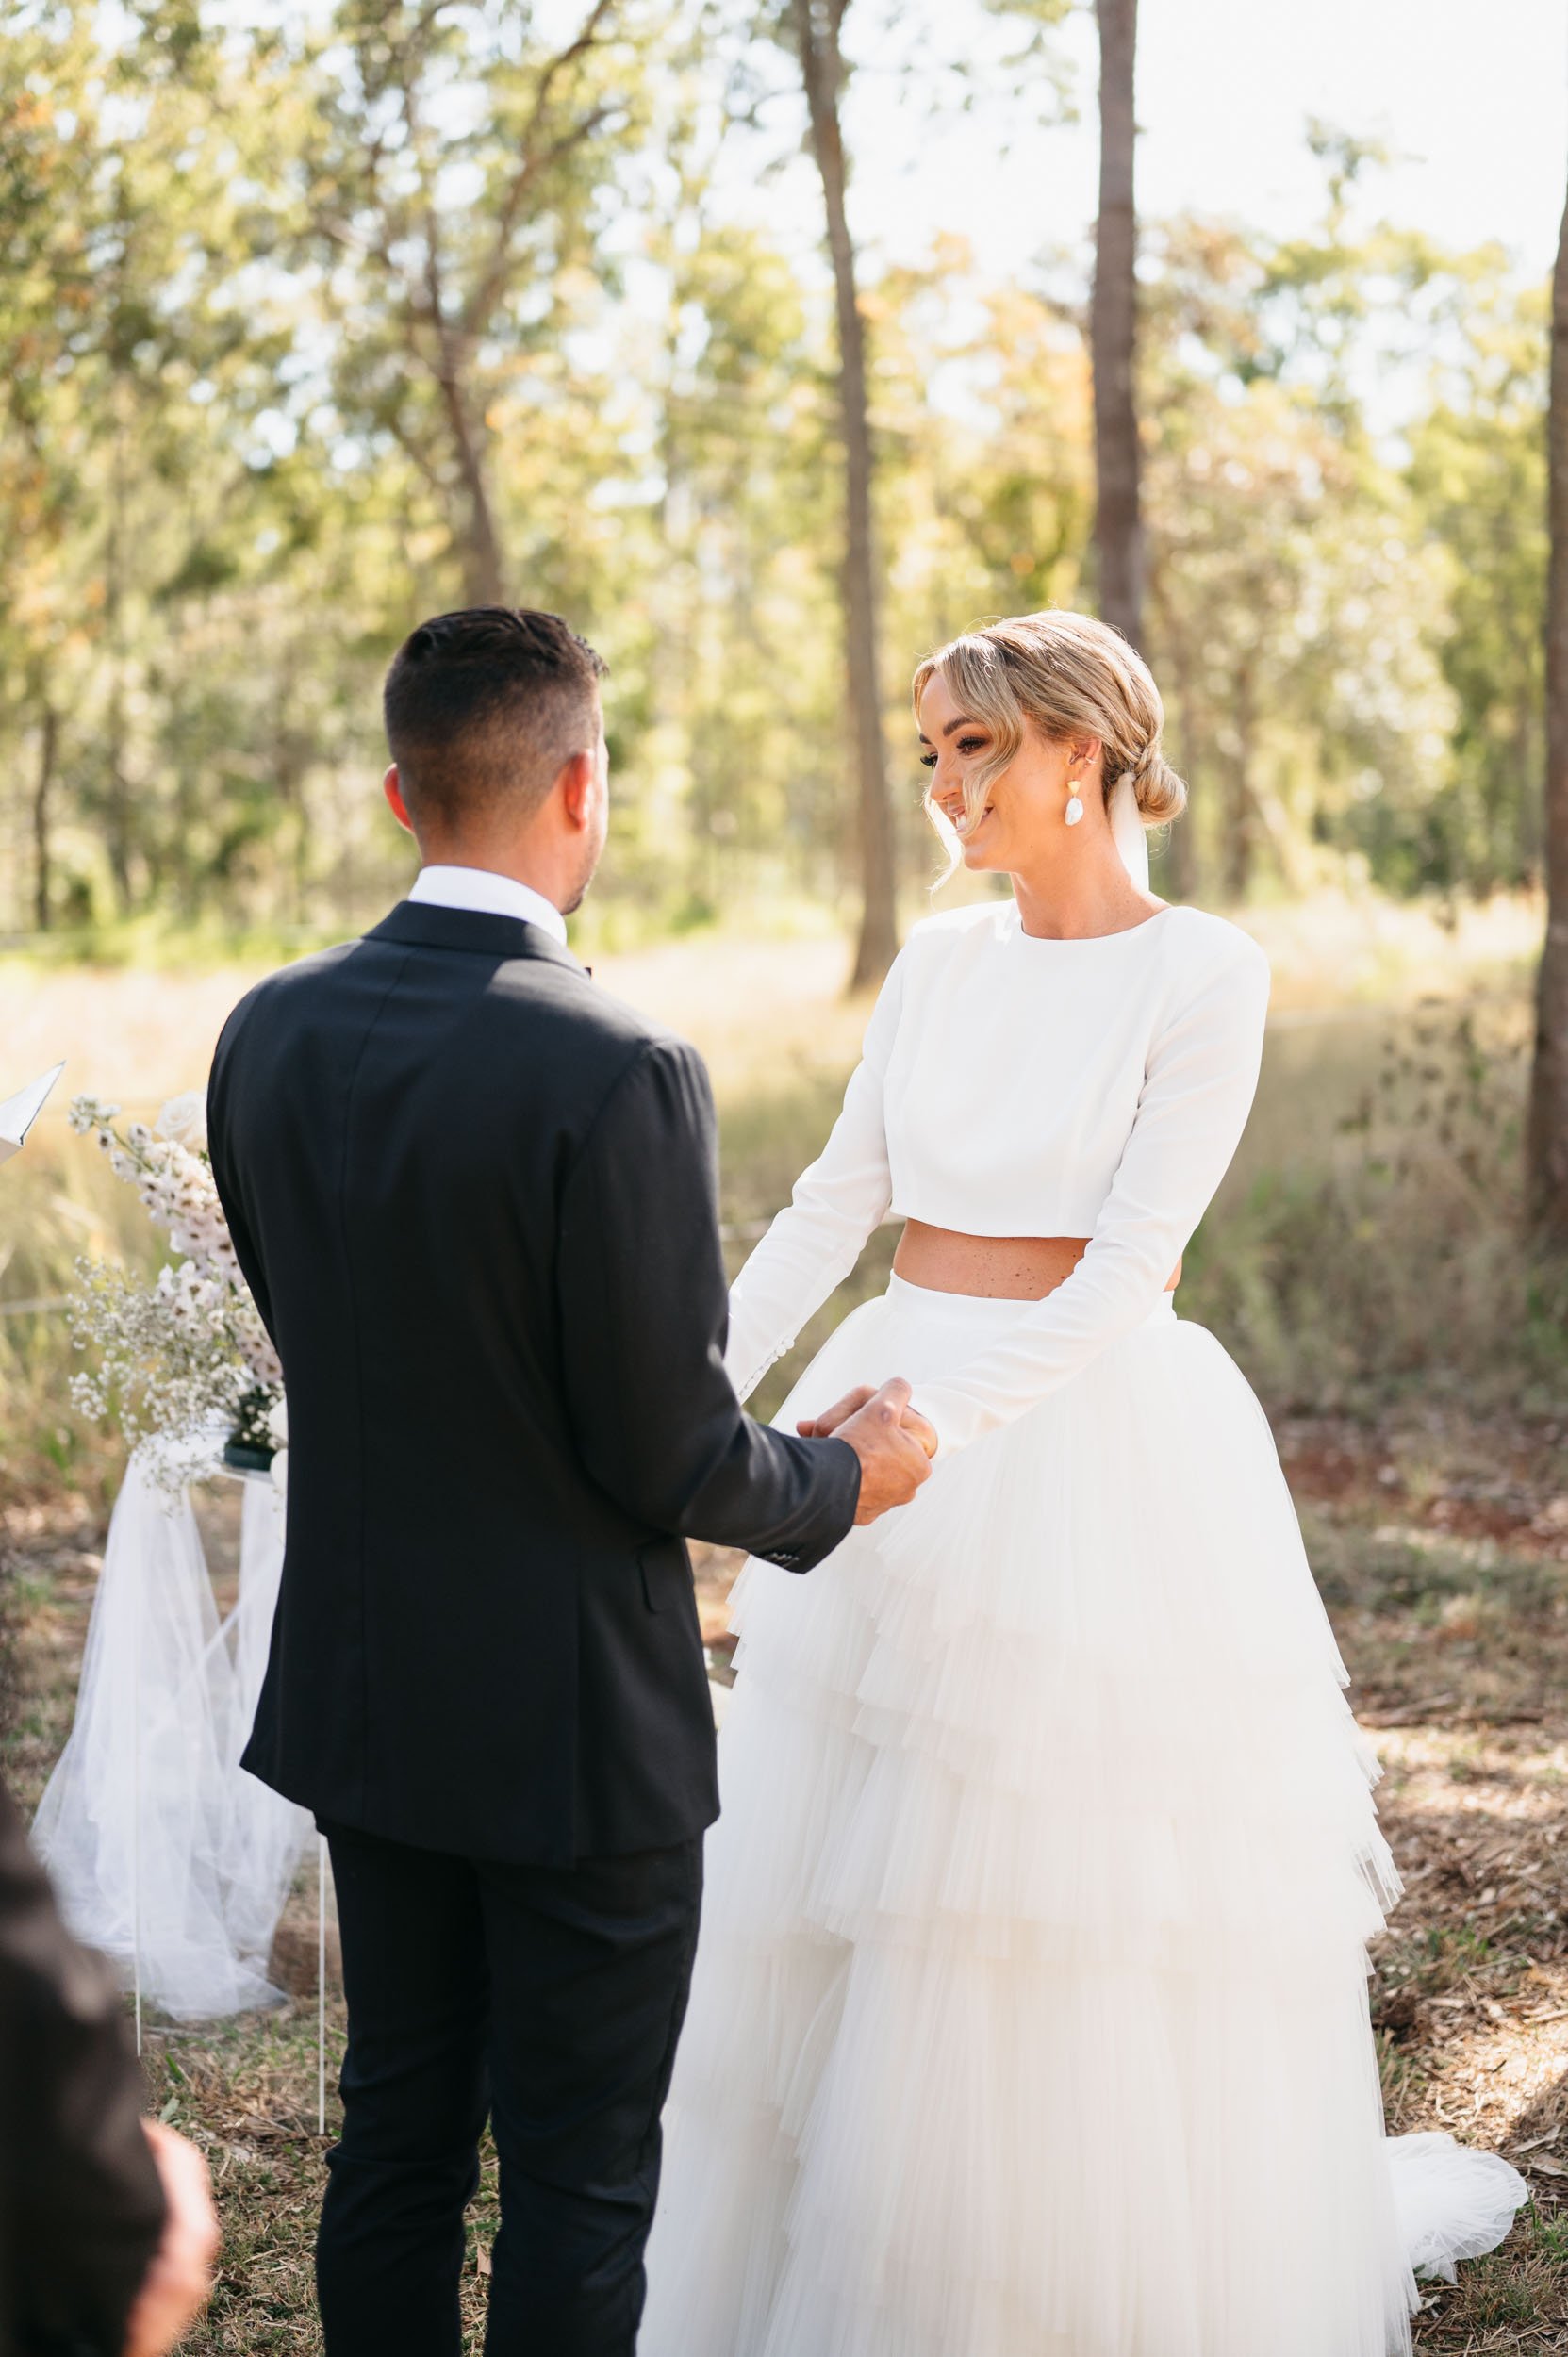 The Raw Photographer - Cairns Wedding Photographer - Mareeba Tablelands - Queensland photography - Kyha dress - luxury-24.jpg